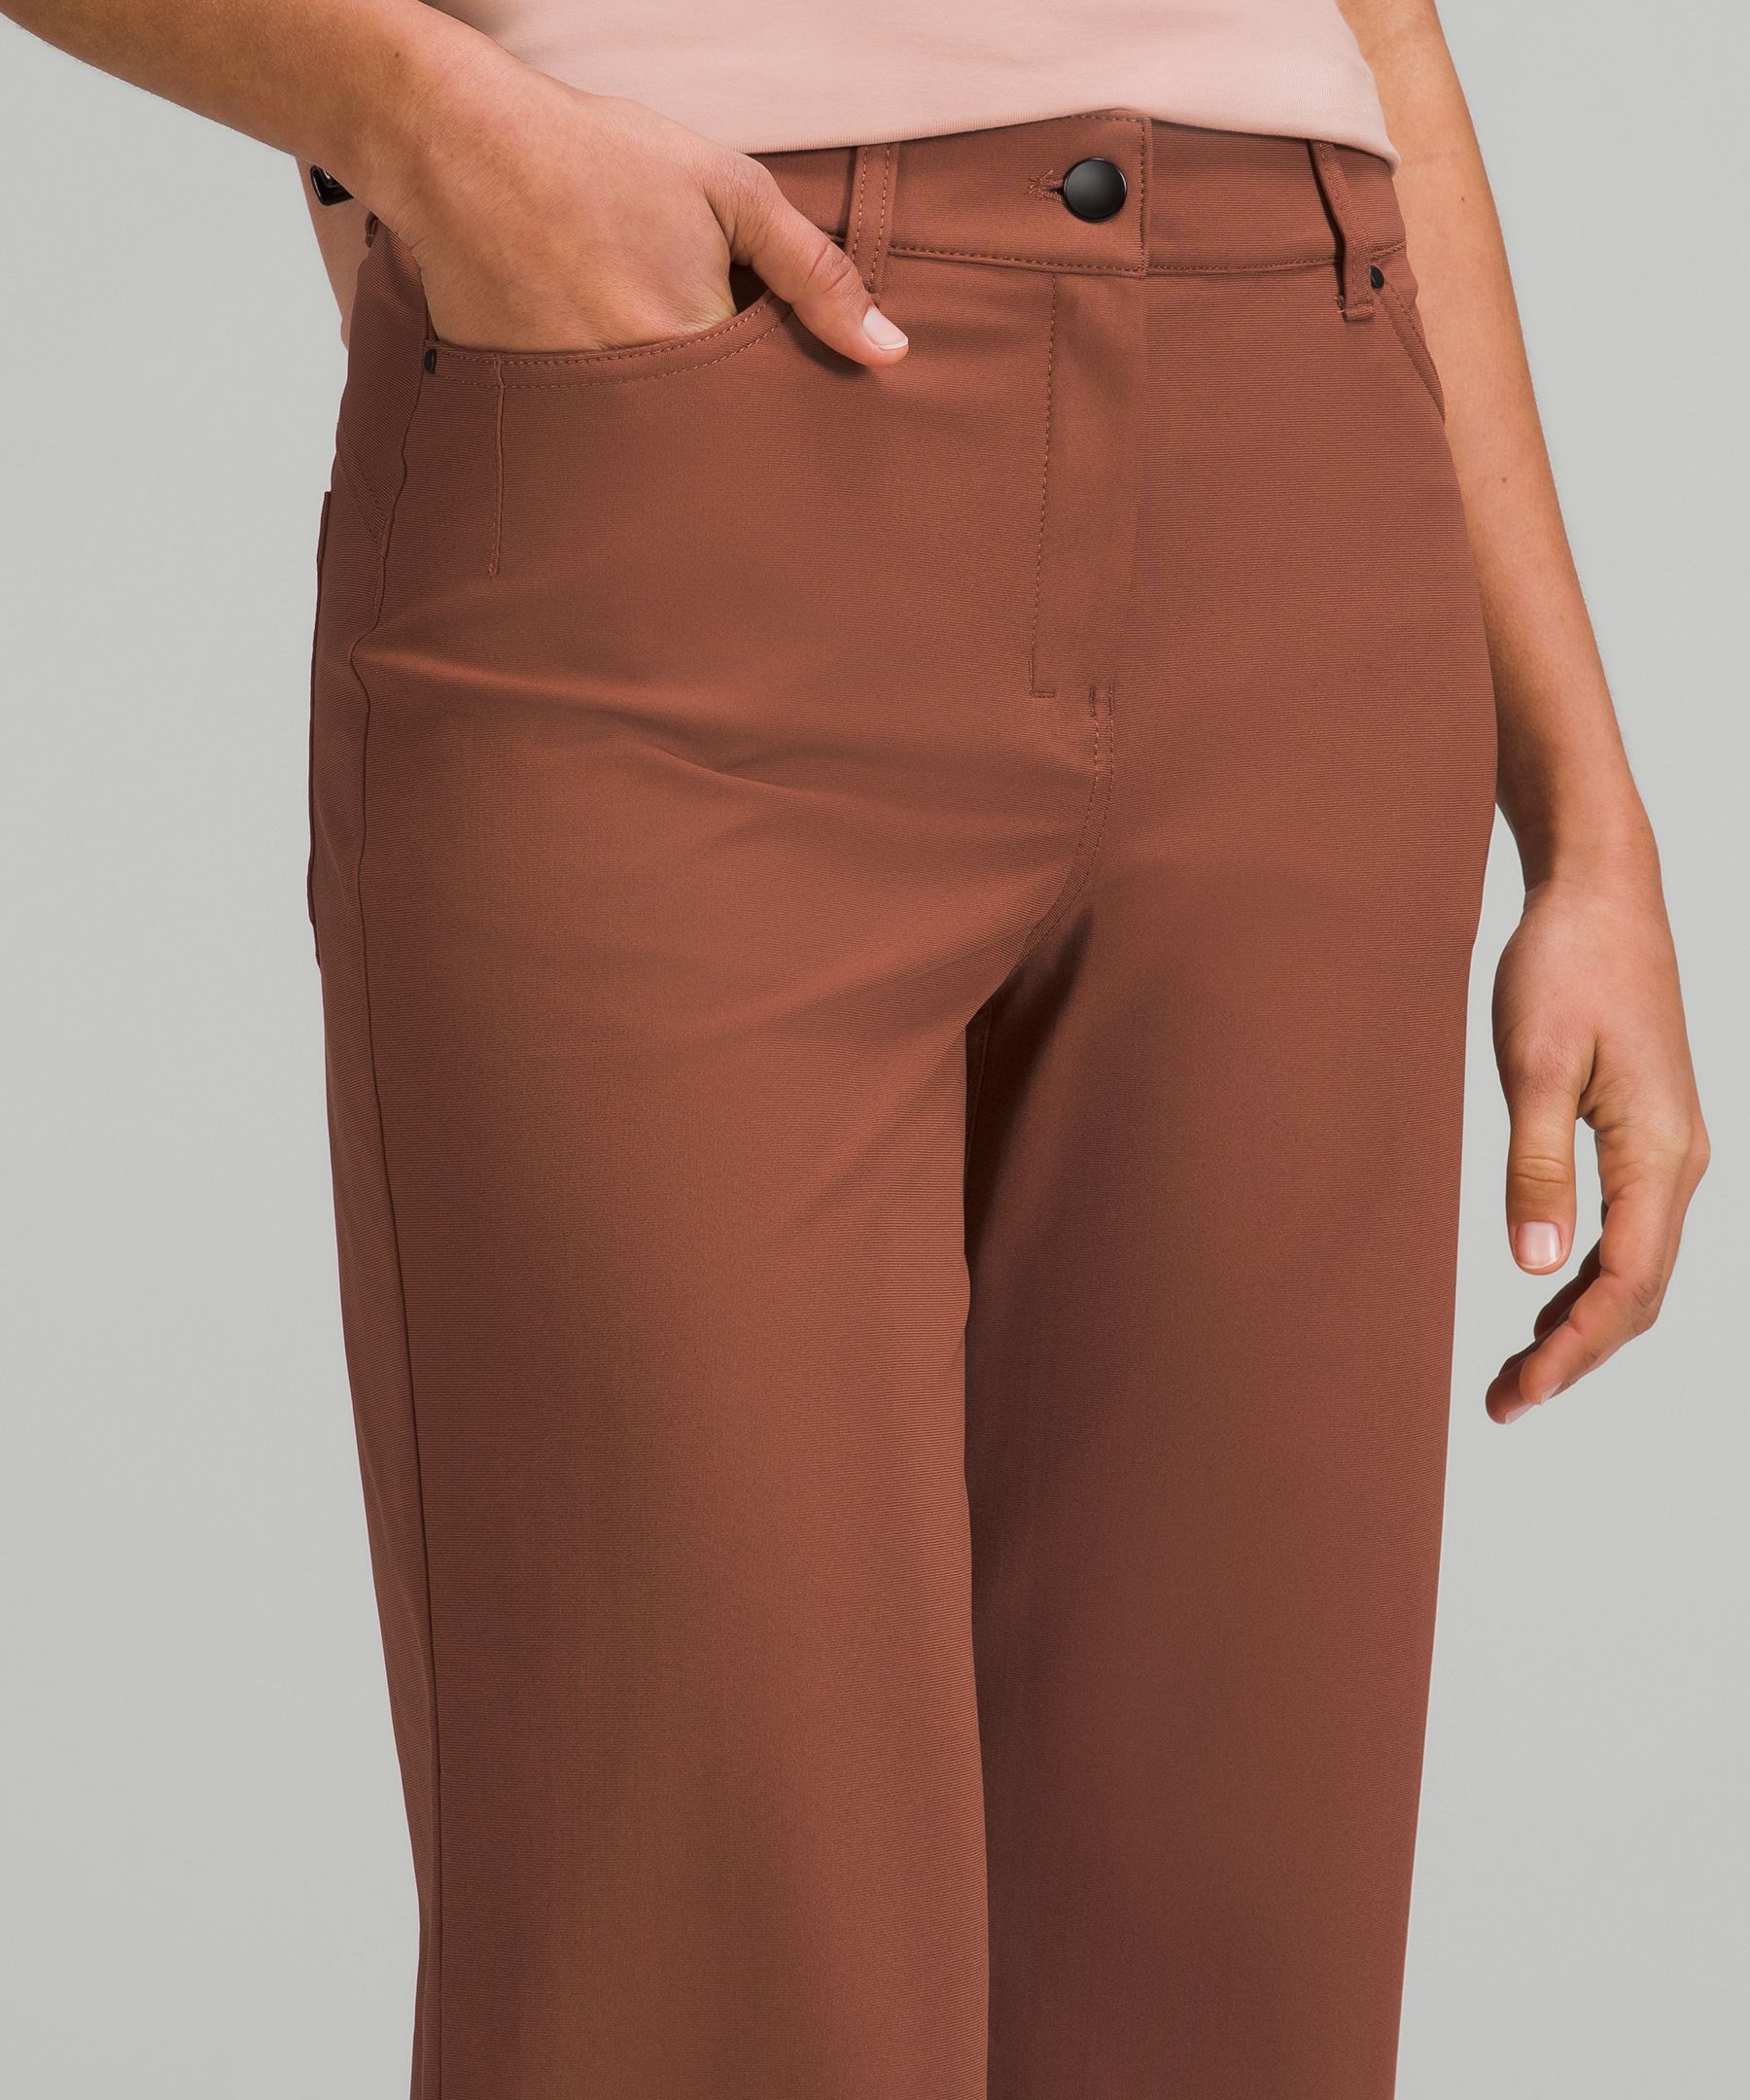 Lululemon City Sleek Slim-Fit 5 Pocket High-Rise Pant - Artifact / Artifact  - lulu fanatics